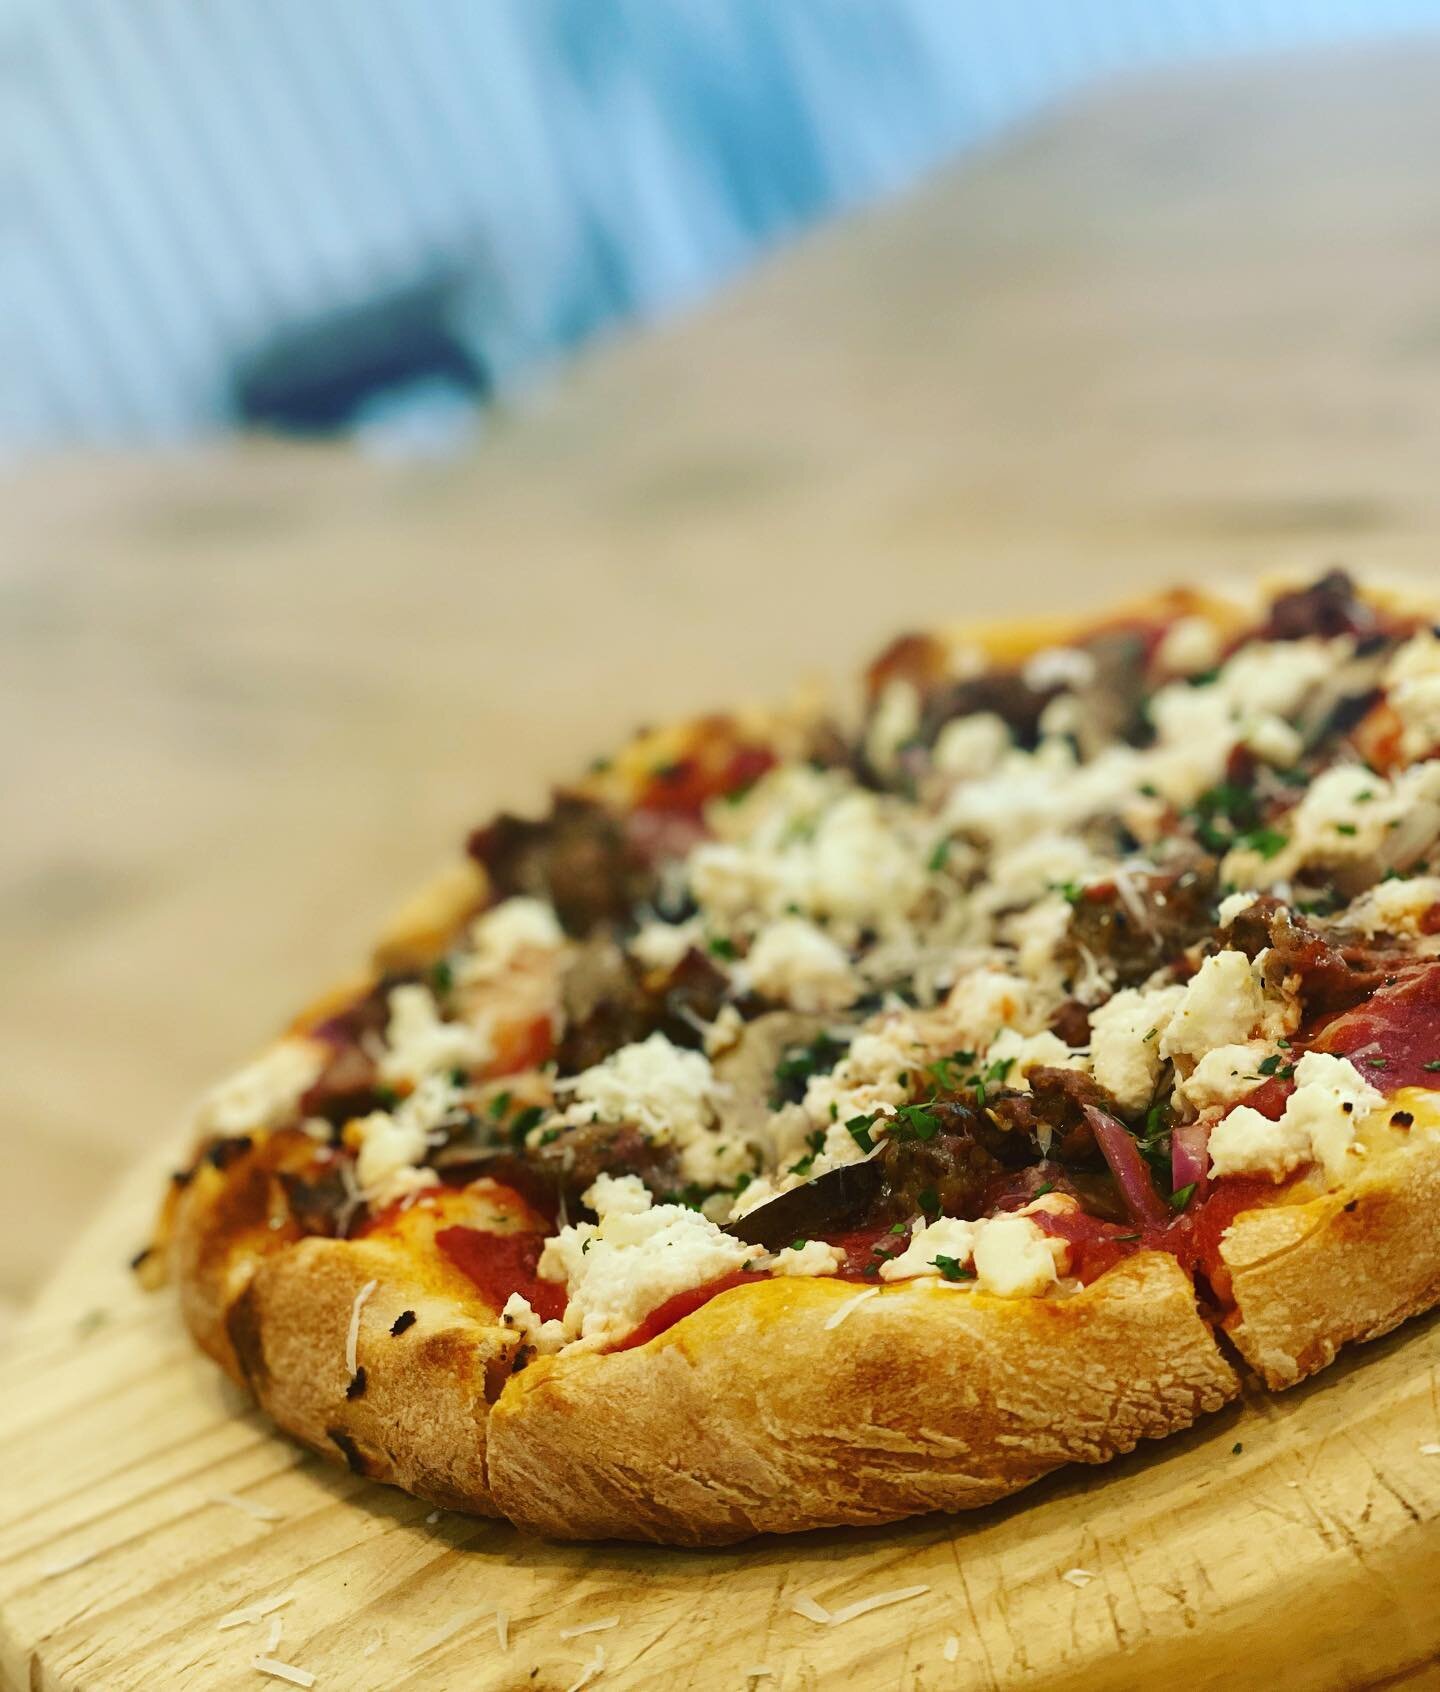 Sue 

@wagner_market Sausage // Onion // Mushroom // Ricotta

.
.
.
#pizza #pizzeria #food #foodporn #foodie #parm #sausage #chef #cheflife #oshkosh #visitoshkosh